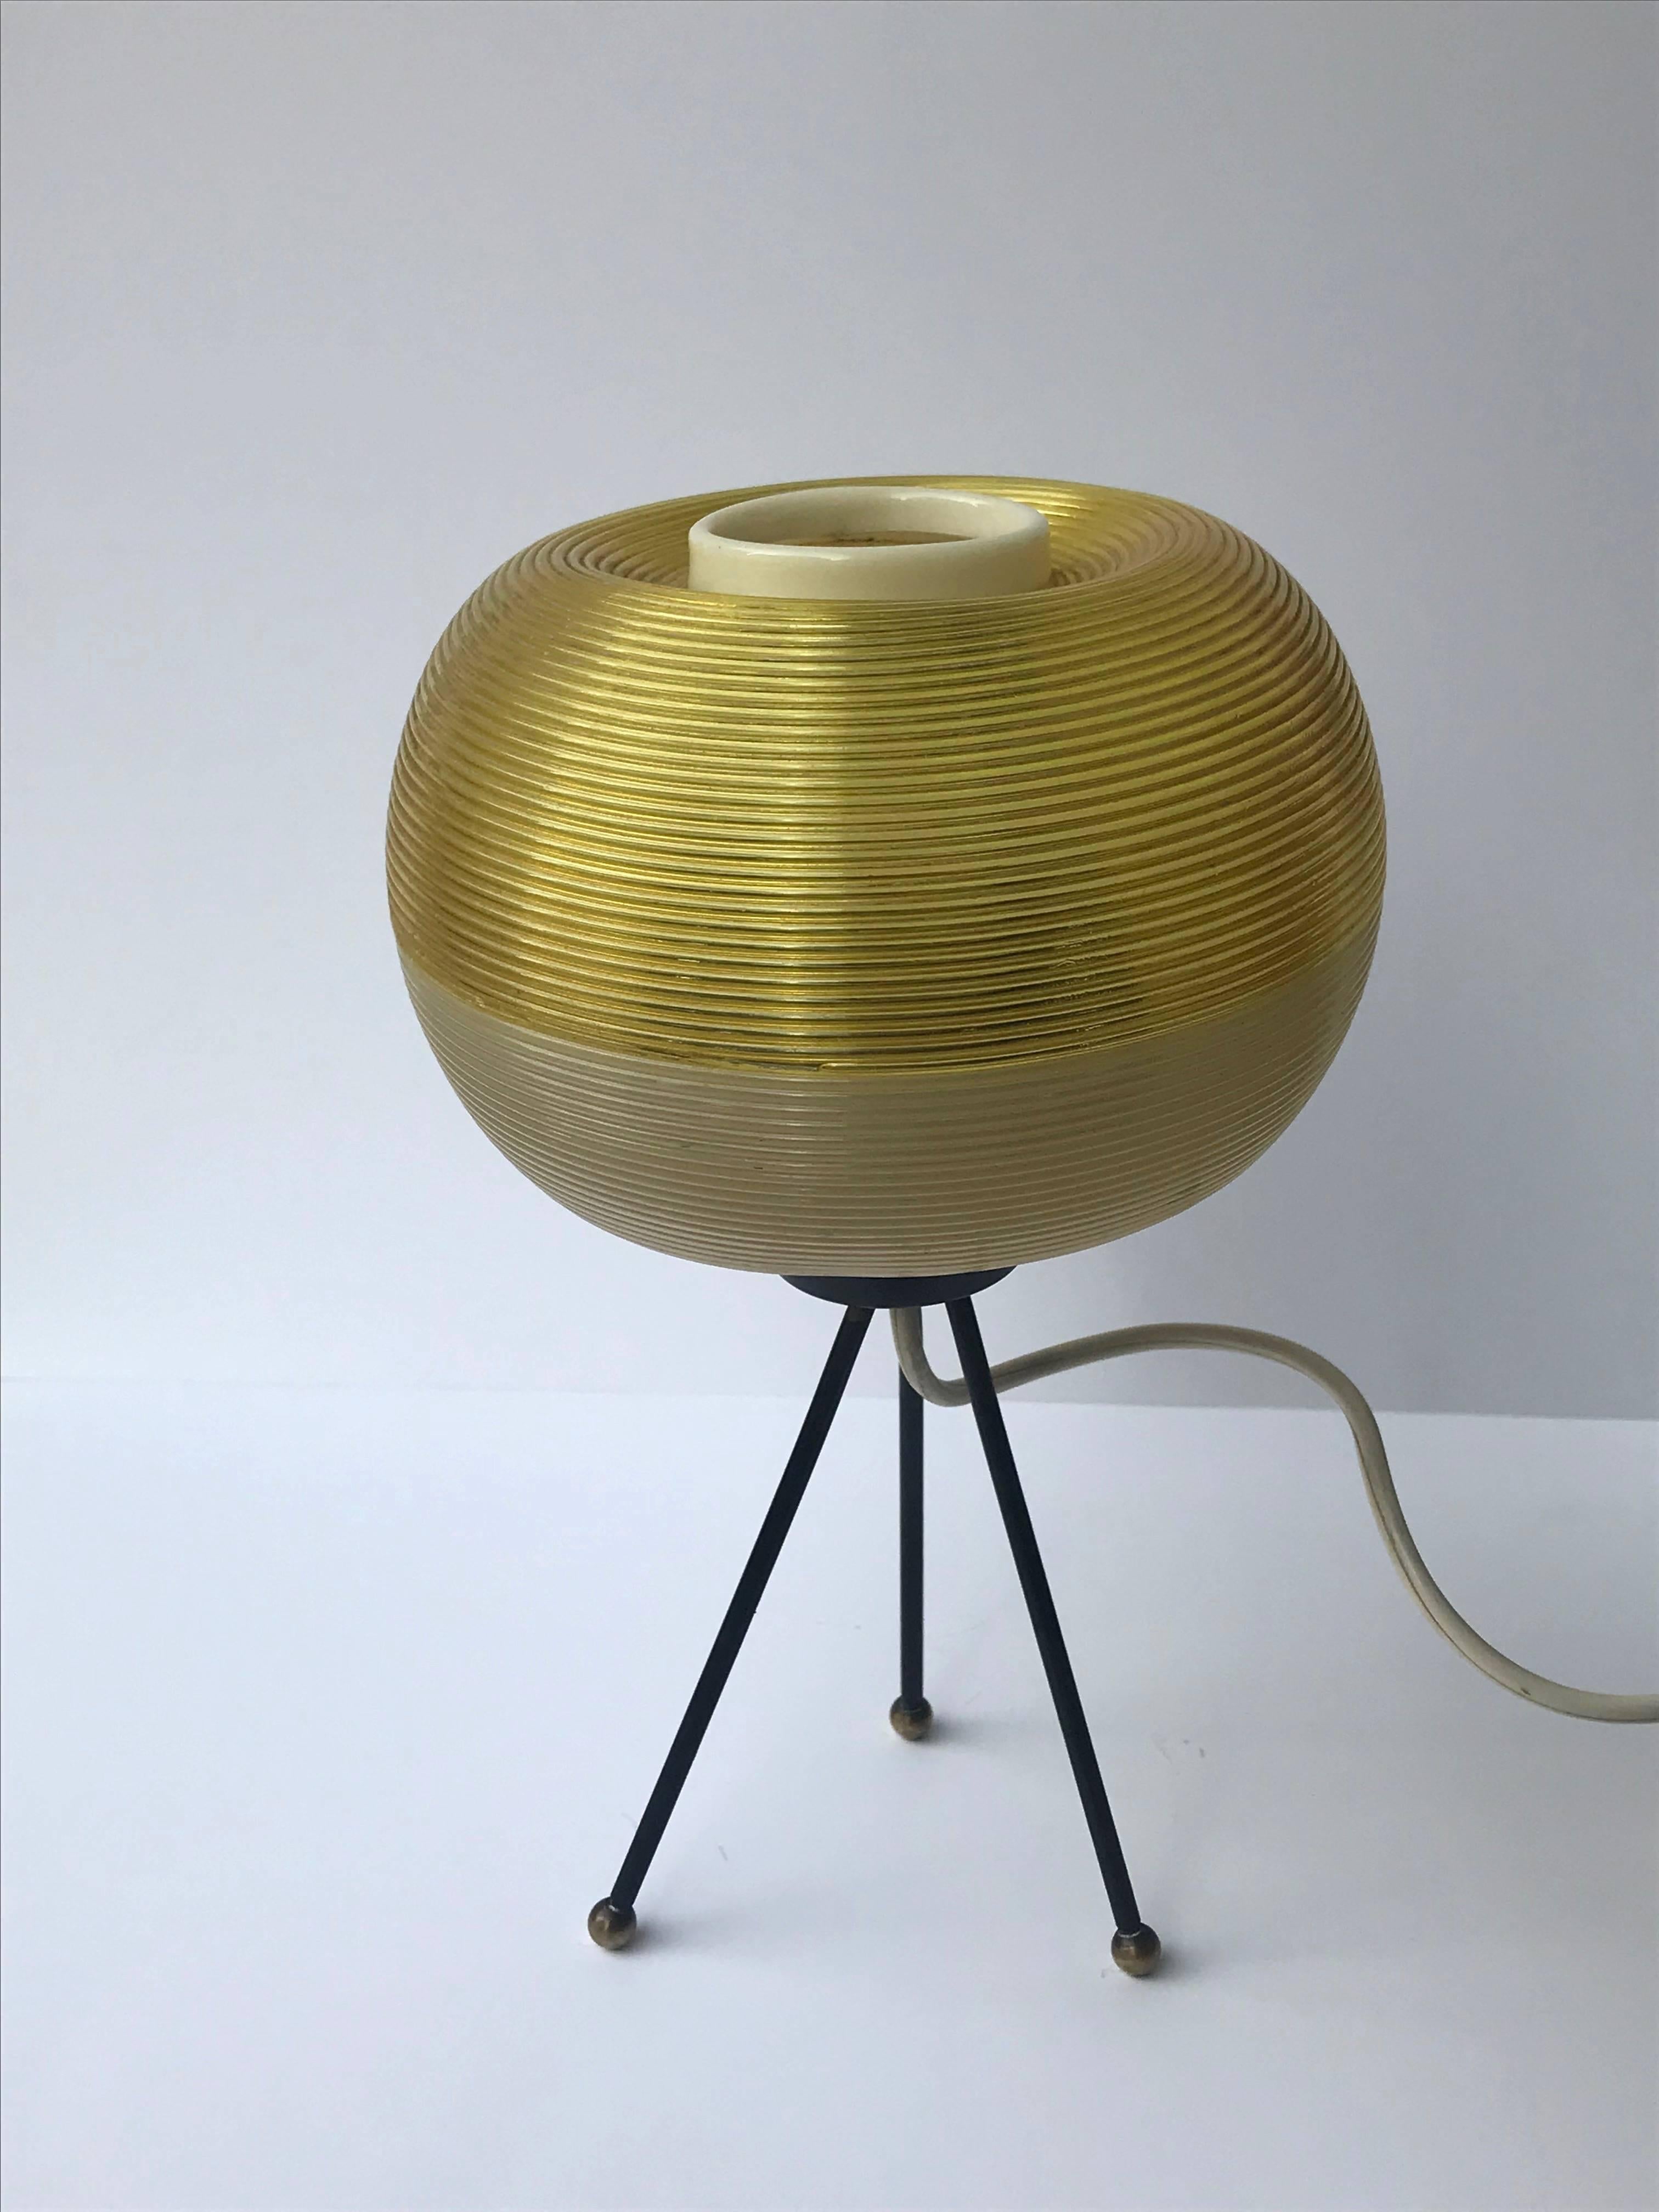 Rotaflex Table Lamp Disderot ARP Guariche Mortar Motte Design 1950s Table Lamp In Excellent Condition In Roma, IT